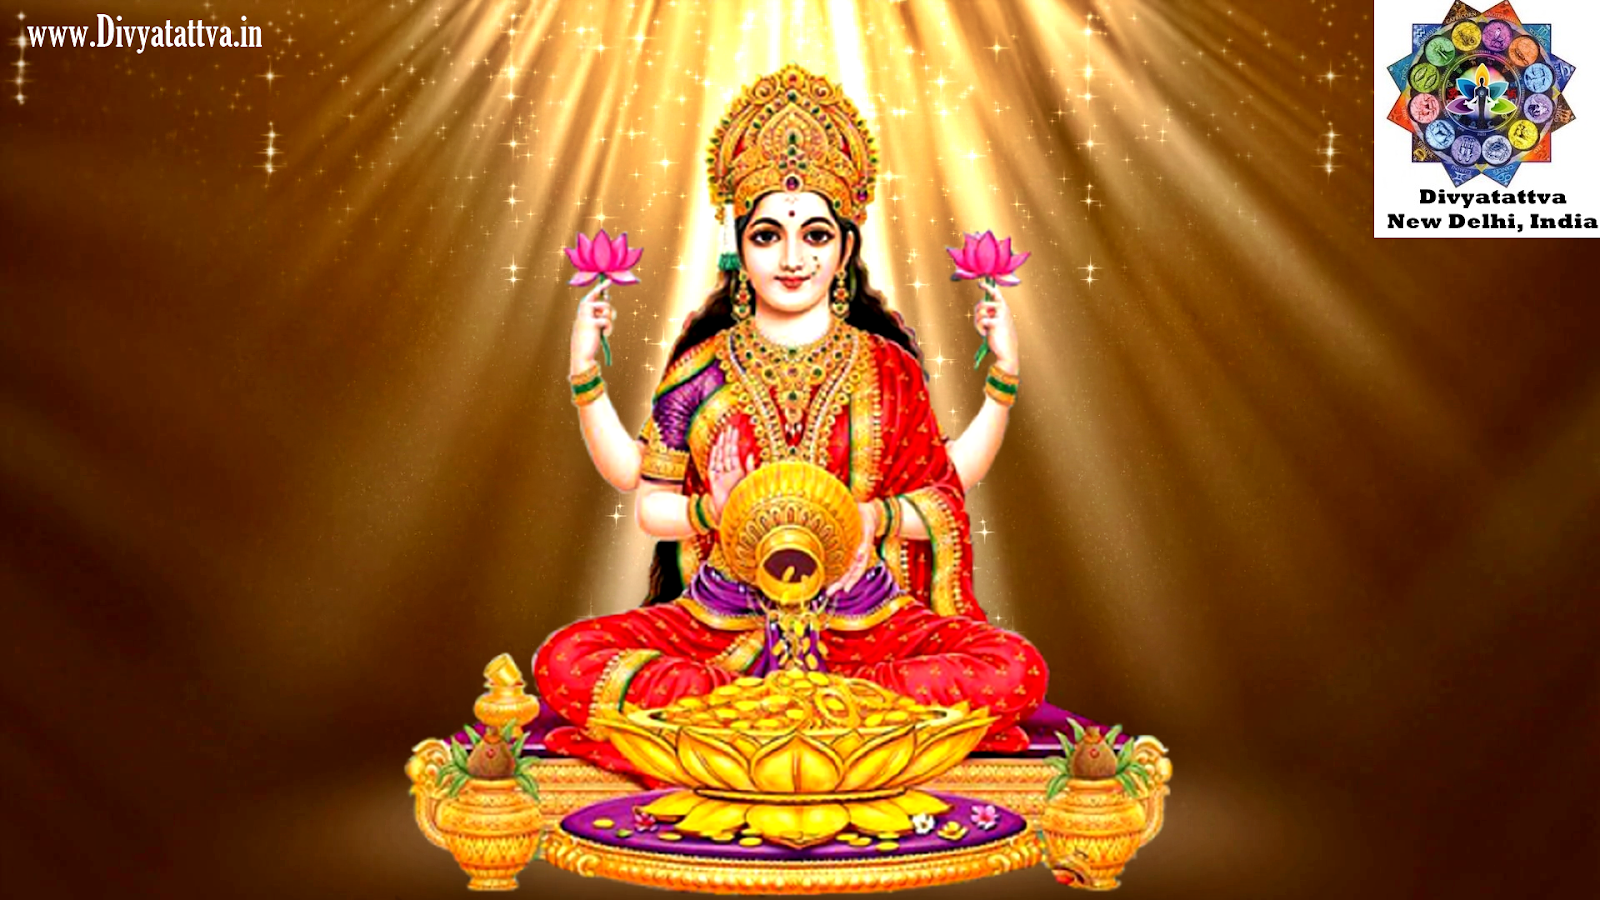 Hdu goddess lakshmi wallpaper hd background photos wealth deity shakti photos